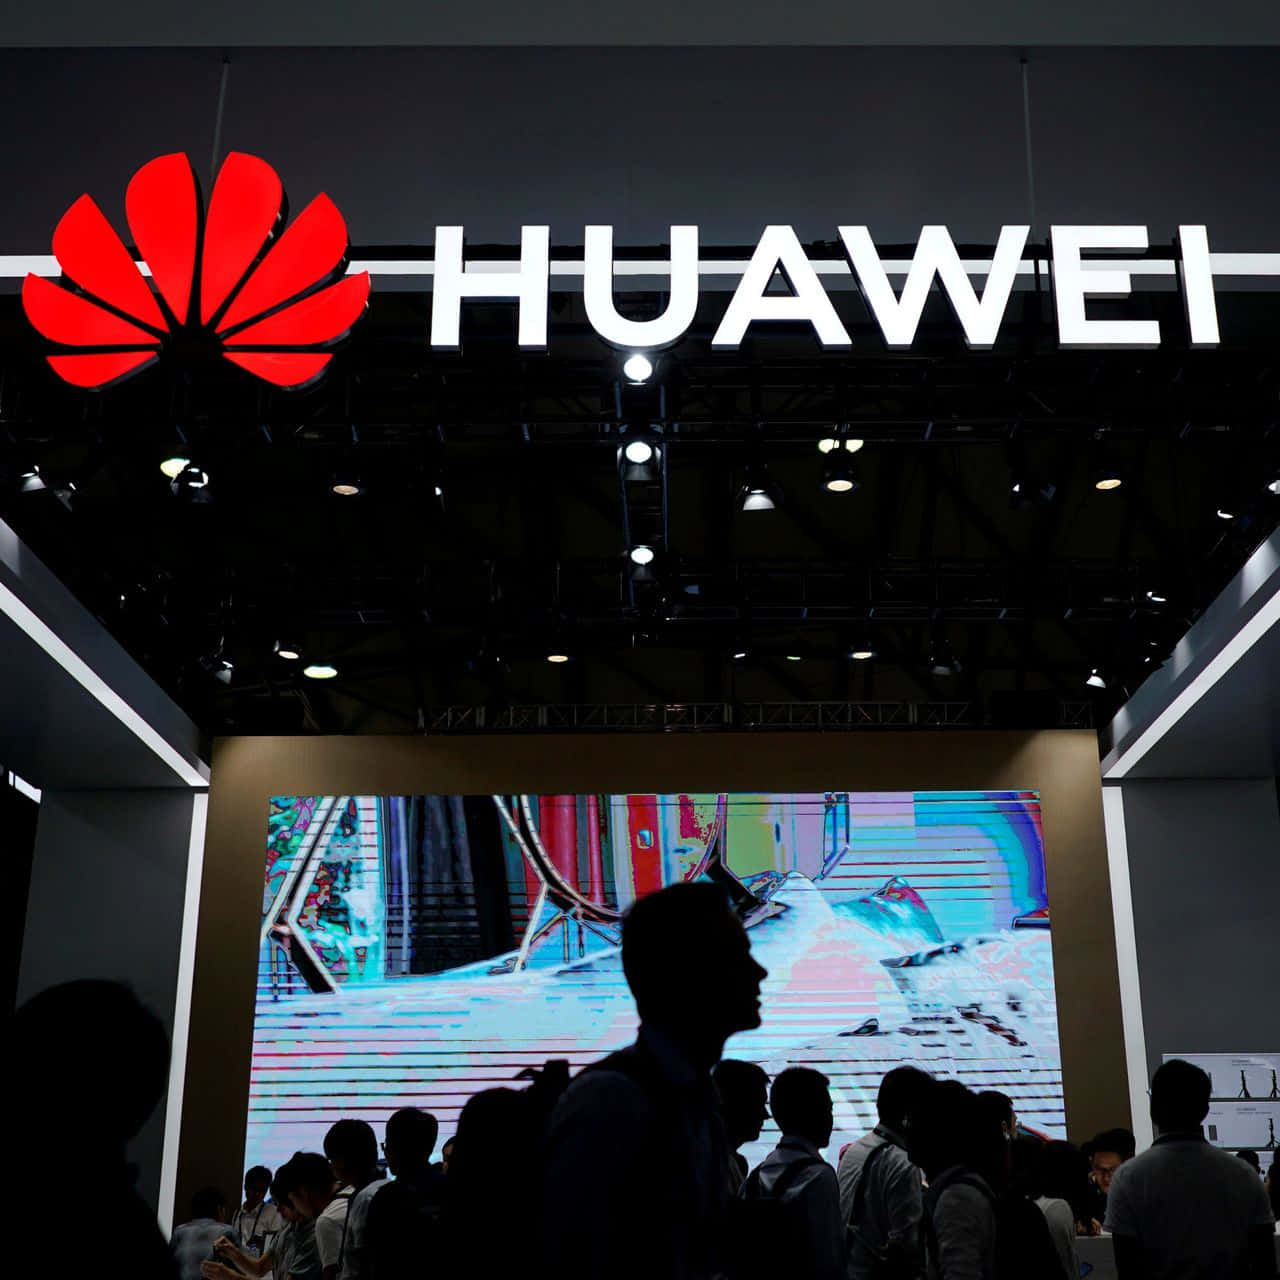 A glimpse of Huawei's advanced technologies